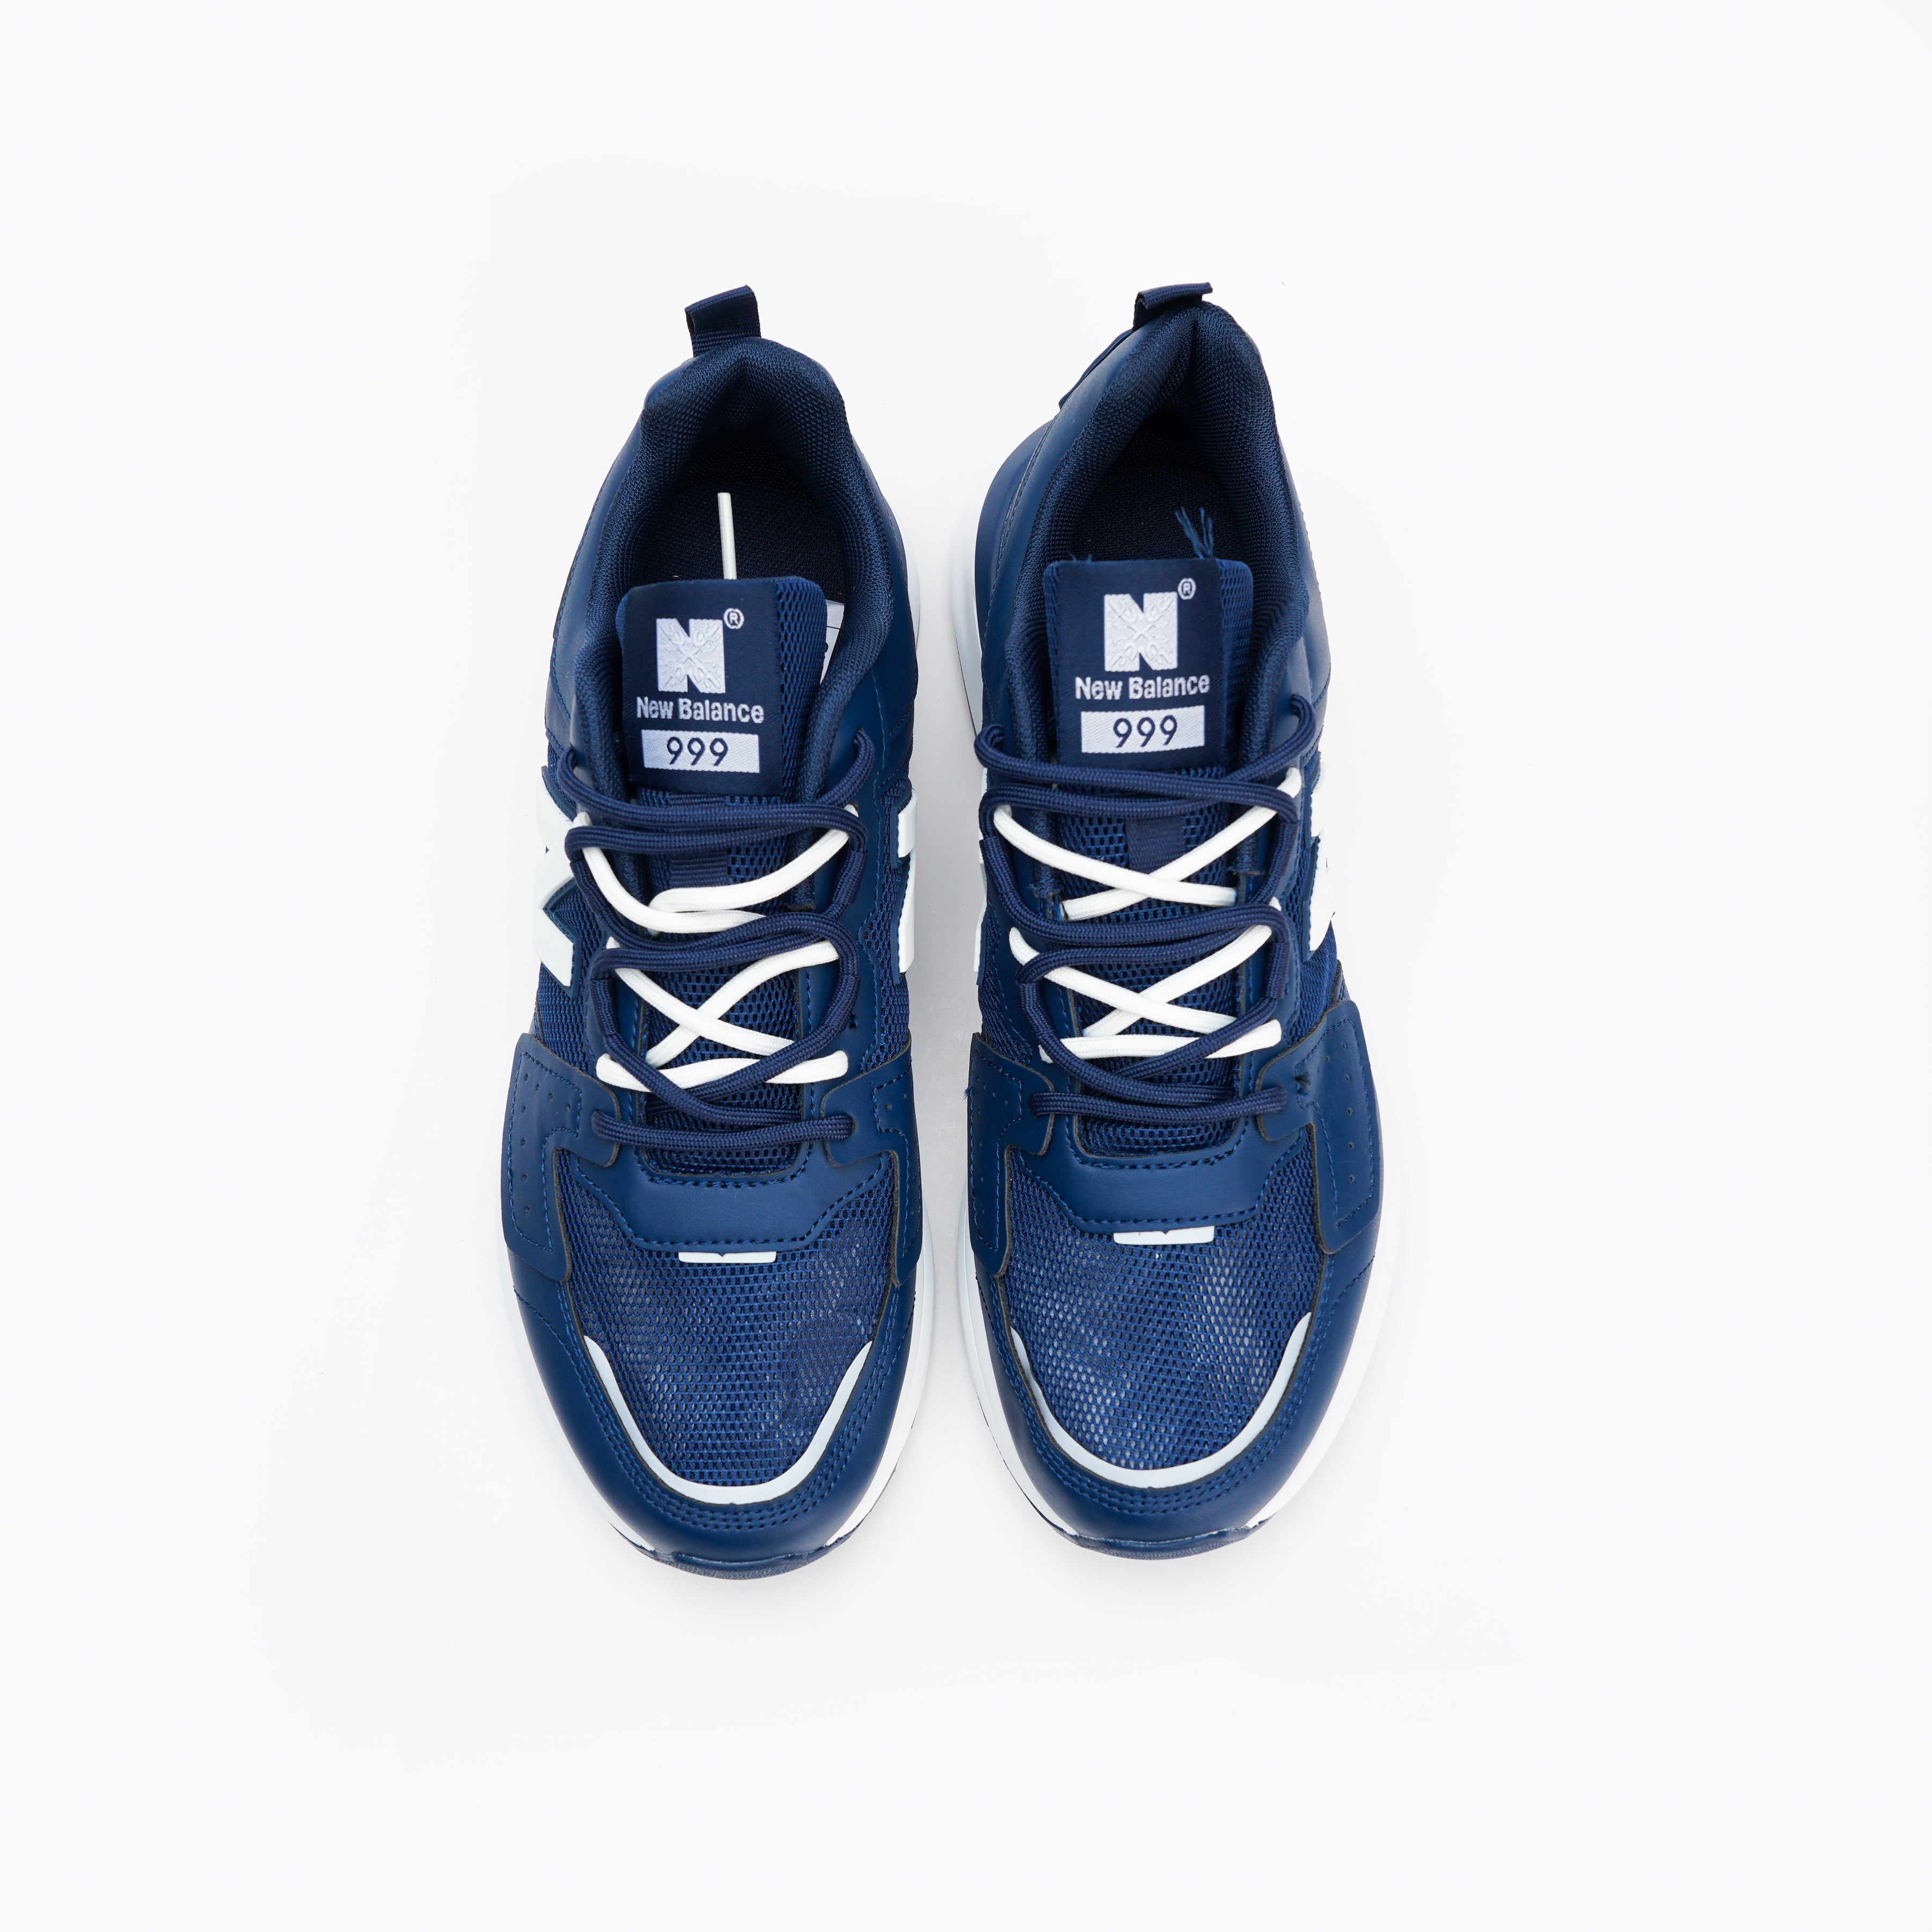 25045-Blue sports stylish Design All Seasons sneaker for men